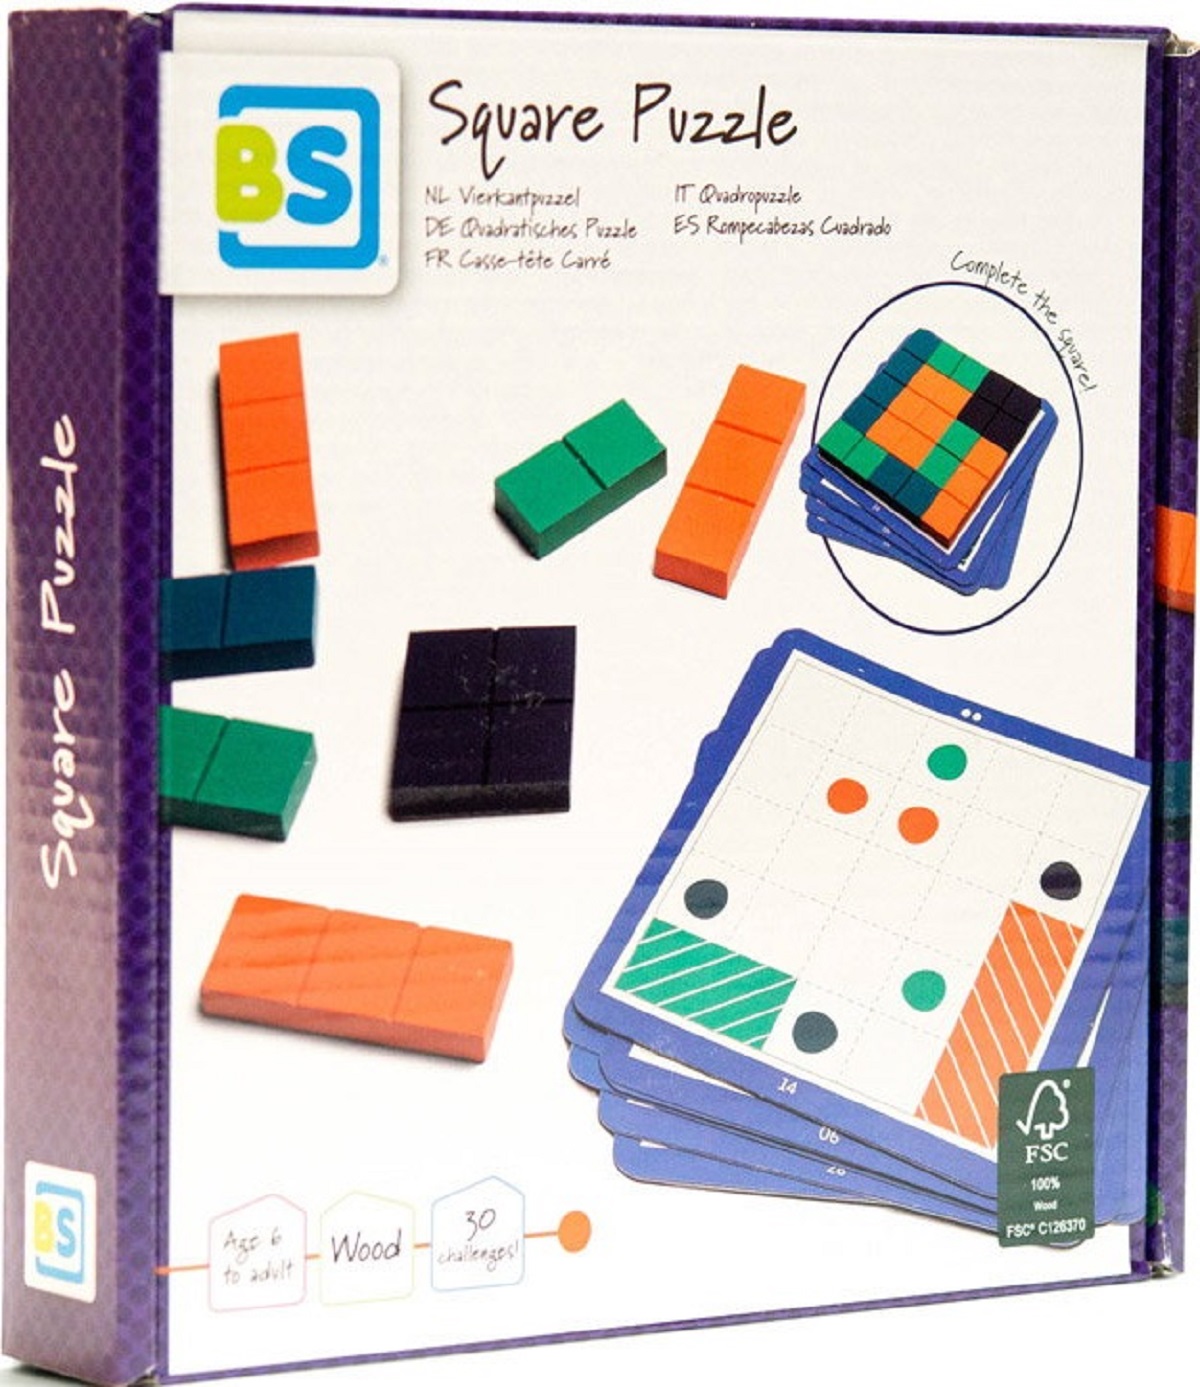 Square Puzzle. Joc de logica din lemn